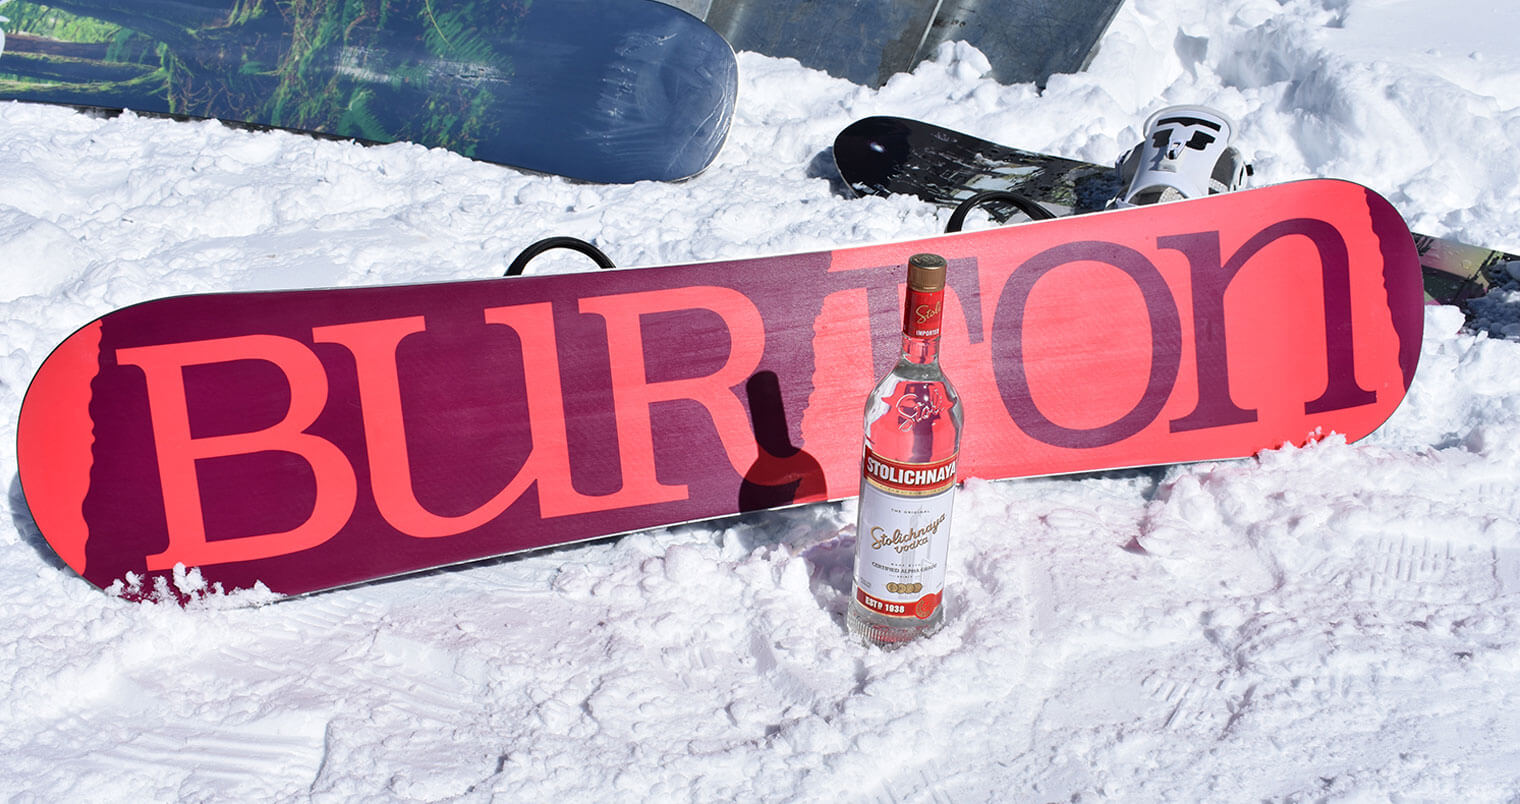 Stoli Vodka and Burton Snowboards Announce Partnership, featured image